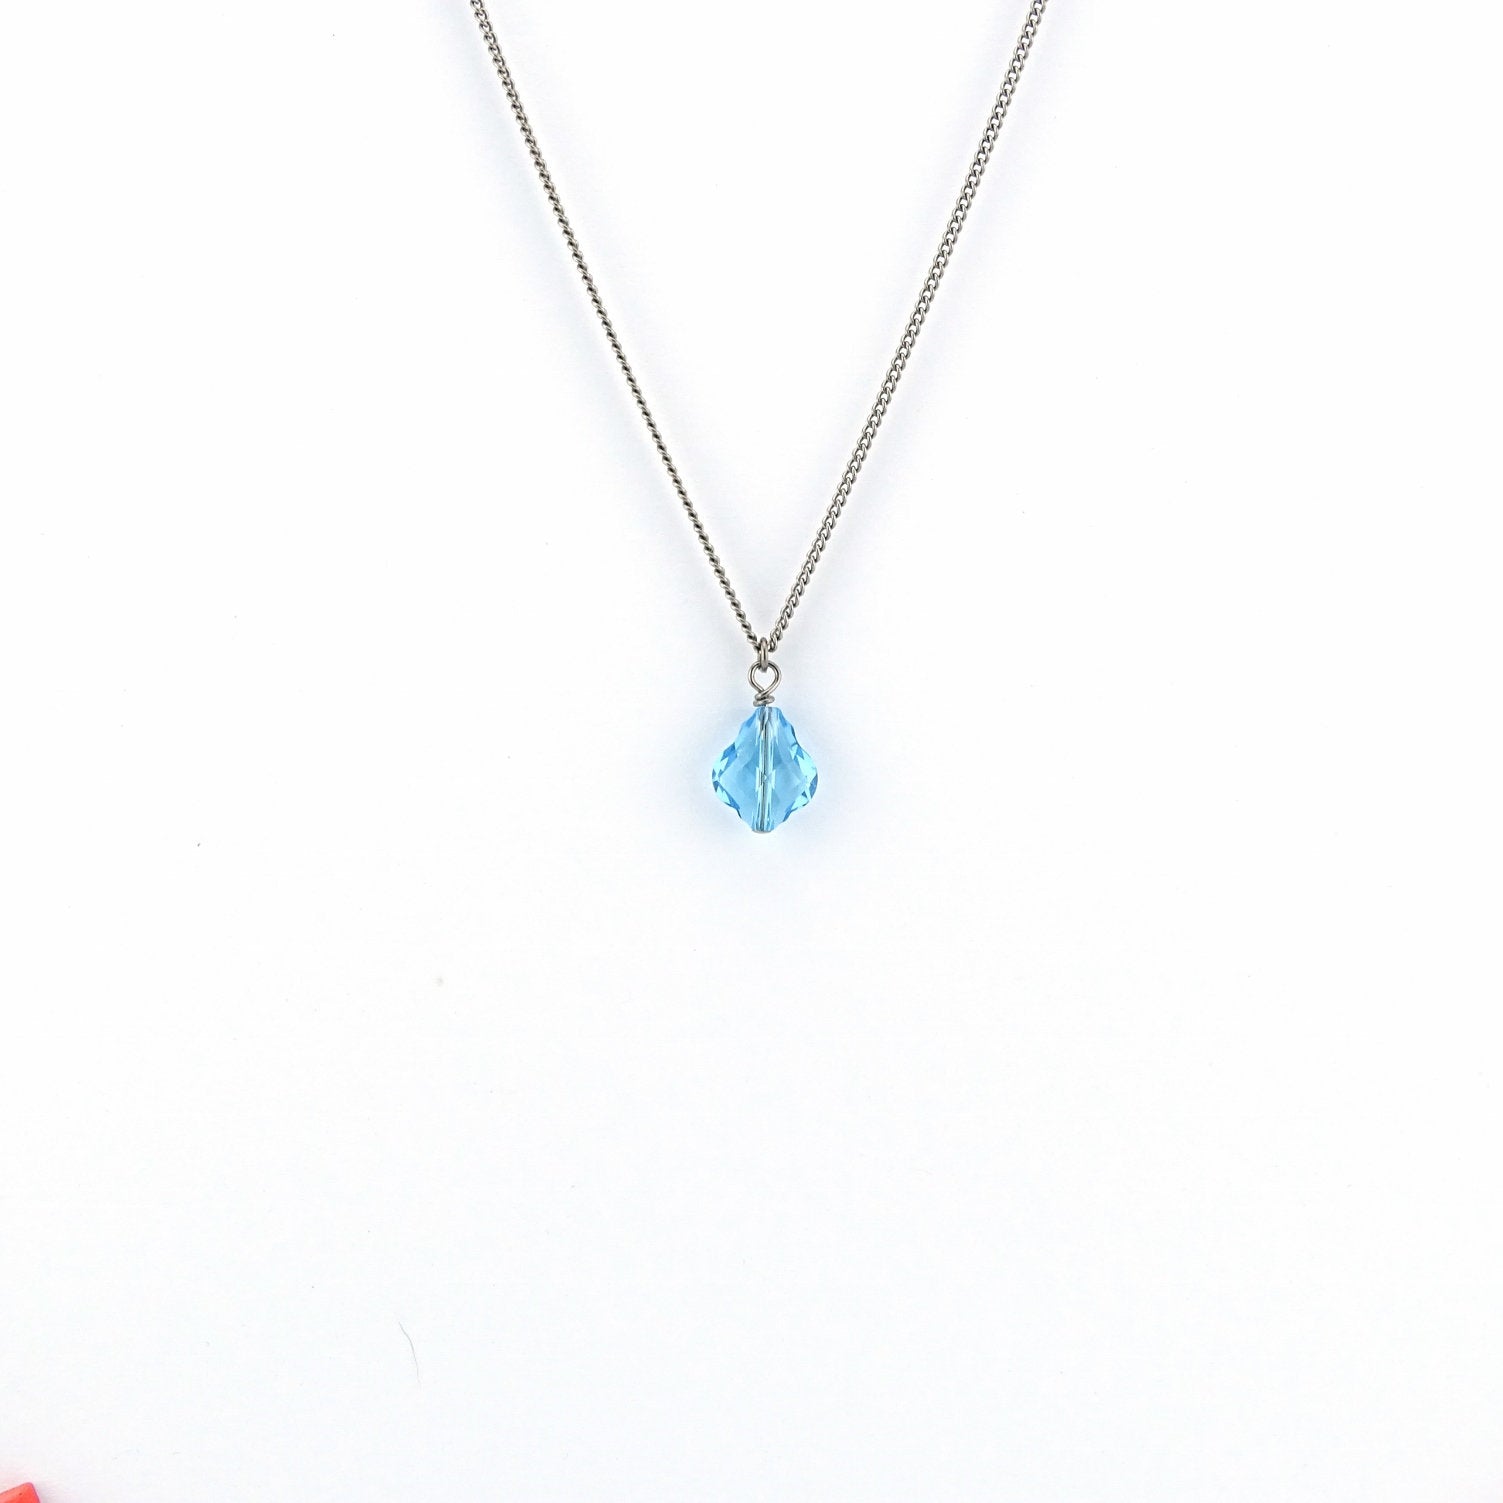 Aquamarine Baroque Crystal Titanium Necklace, Nickel Free Necklace For Sensitive Skin, Aqua Blue Swarovski Crystal, Pure Titanium Jewelry